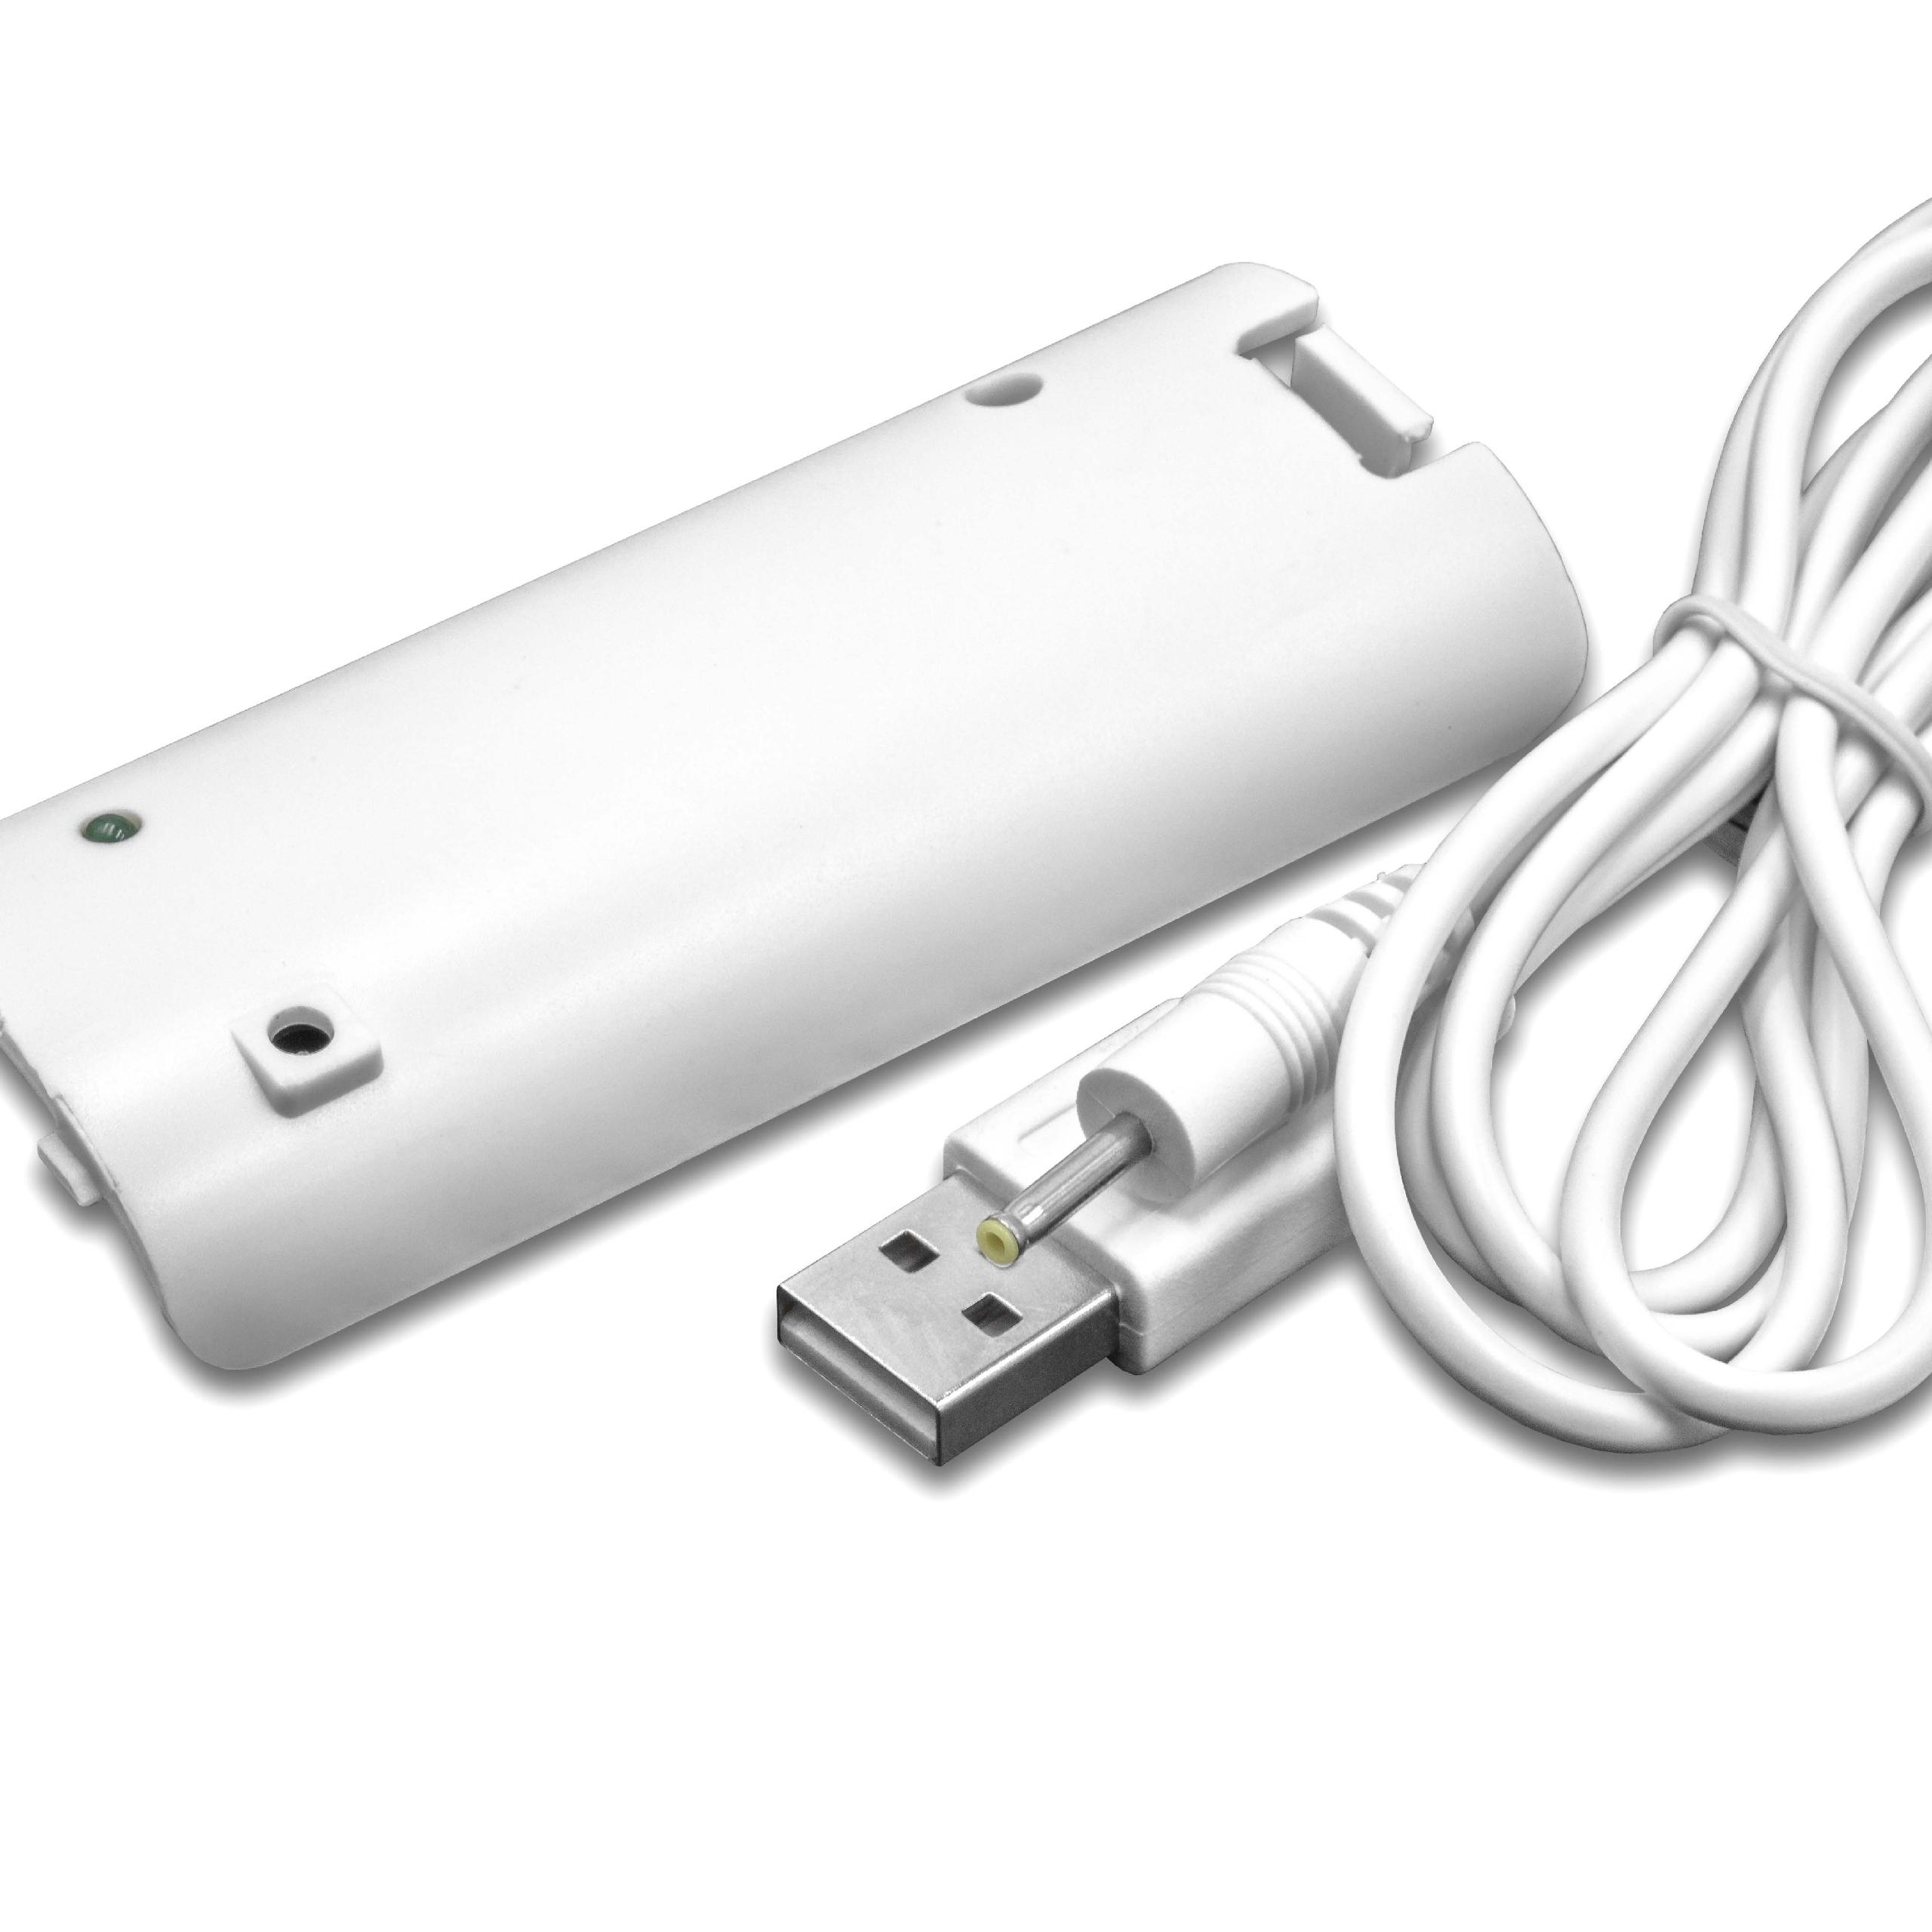 VHBW kompatibel mit Nintendo Wii 400 Remote - Plus 2.4 Volt, Controller, Spielekonsole, Akku NiMH